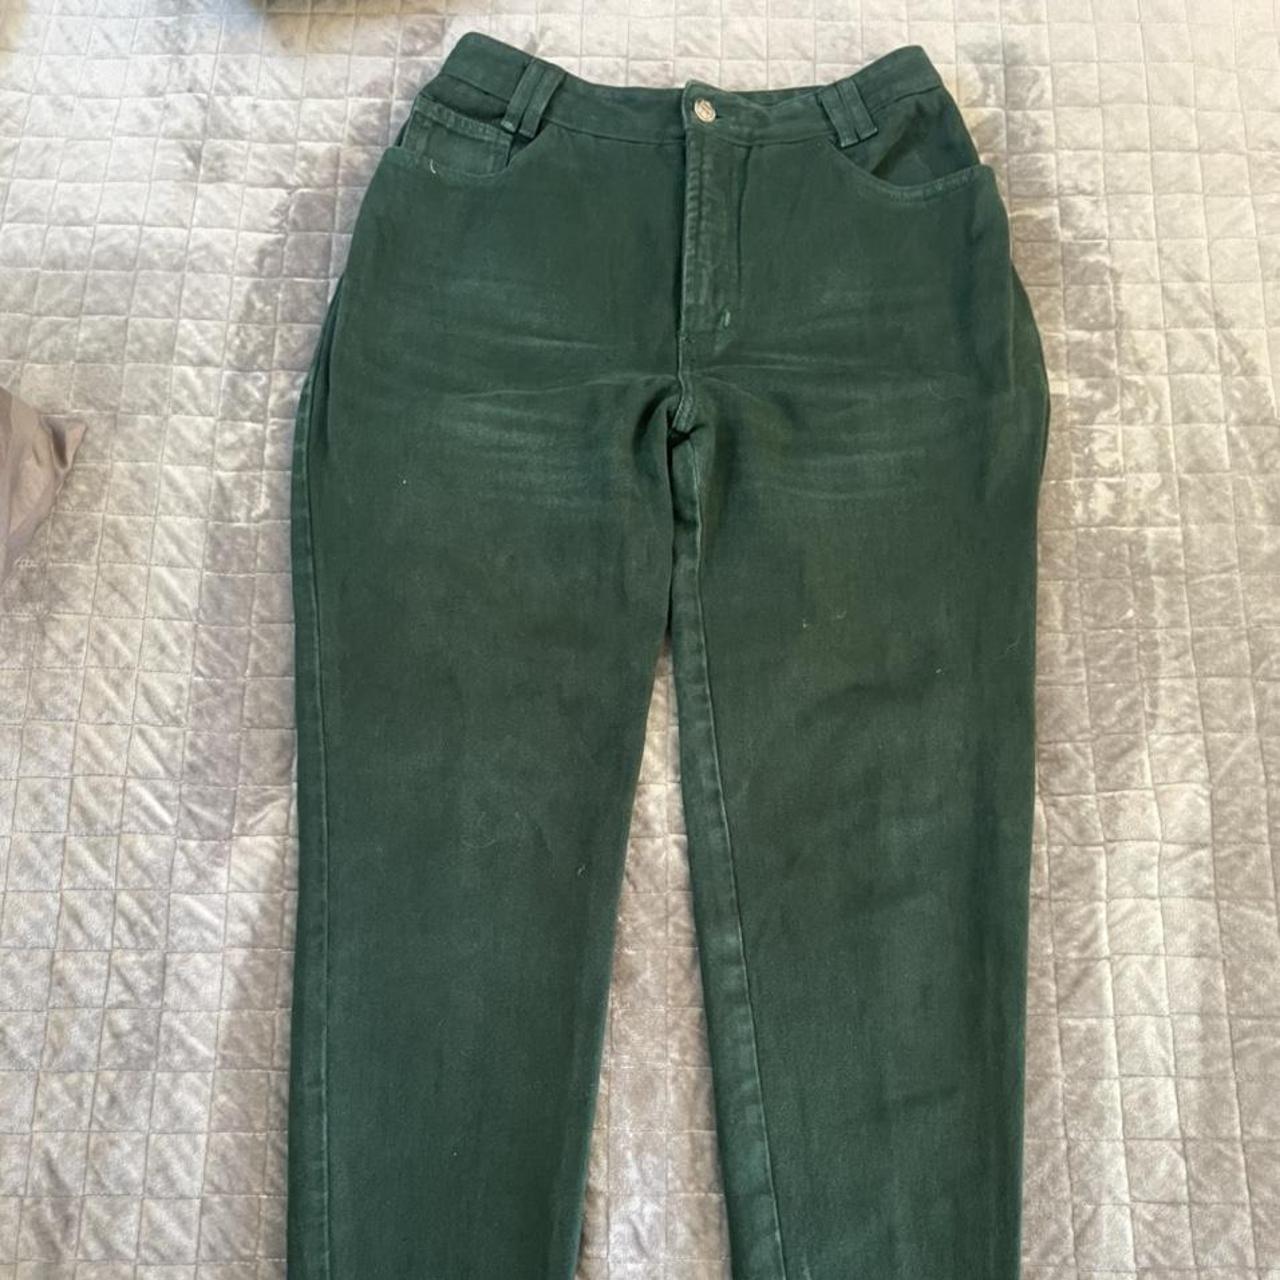 Emerald green baggy jeans - Depop